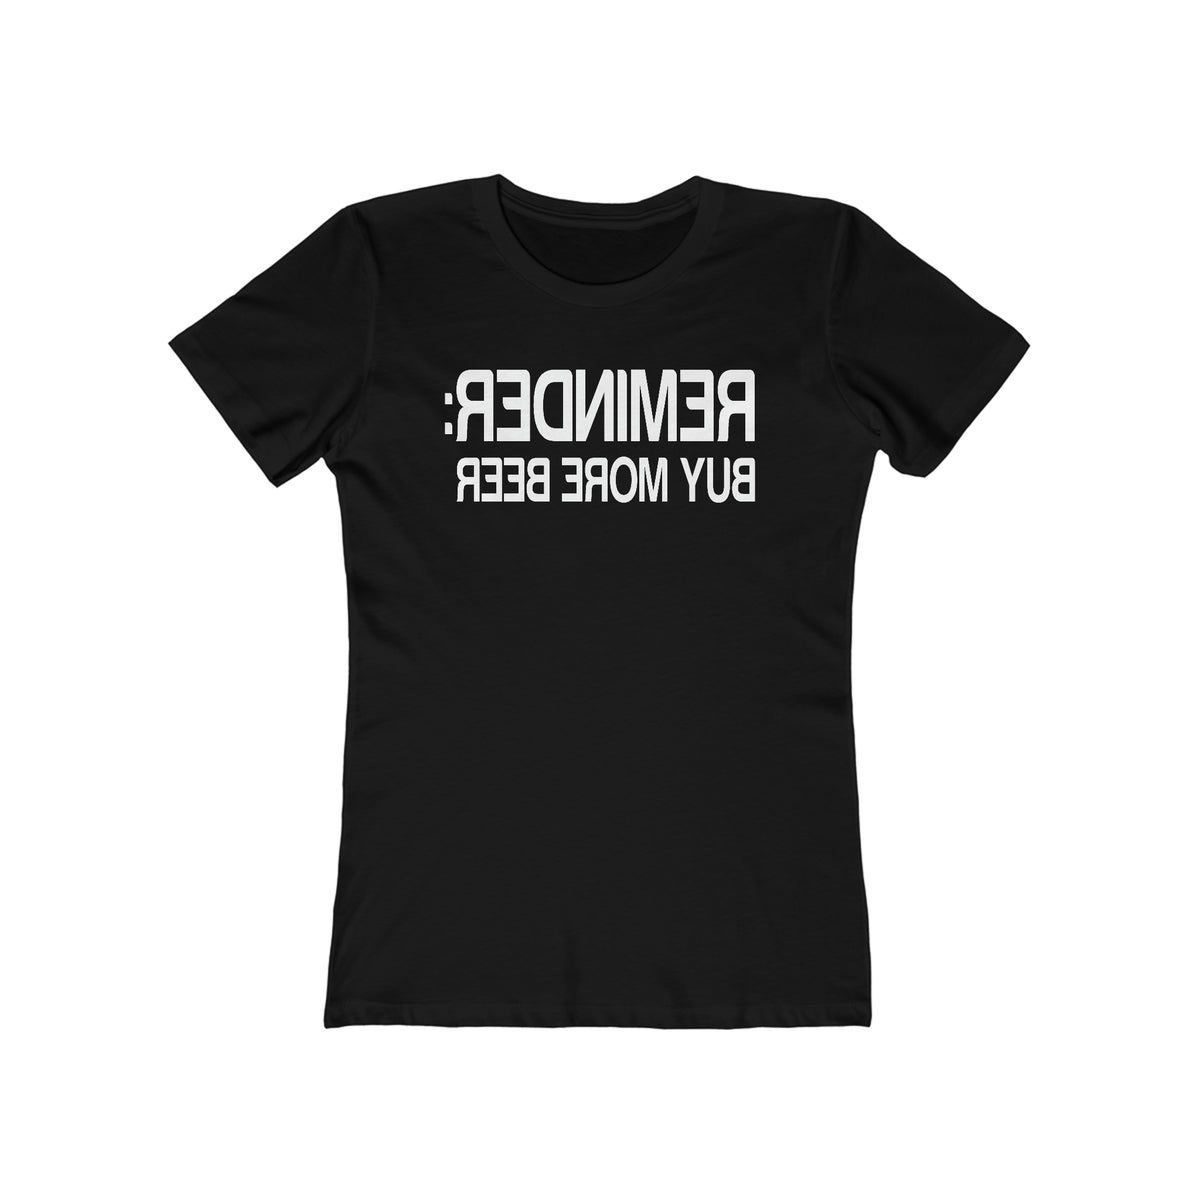 Reminder - Buy More Beer - Women’s T-Shirt